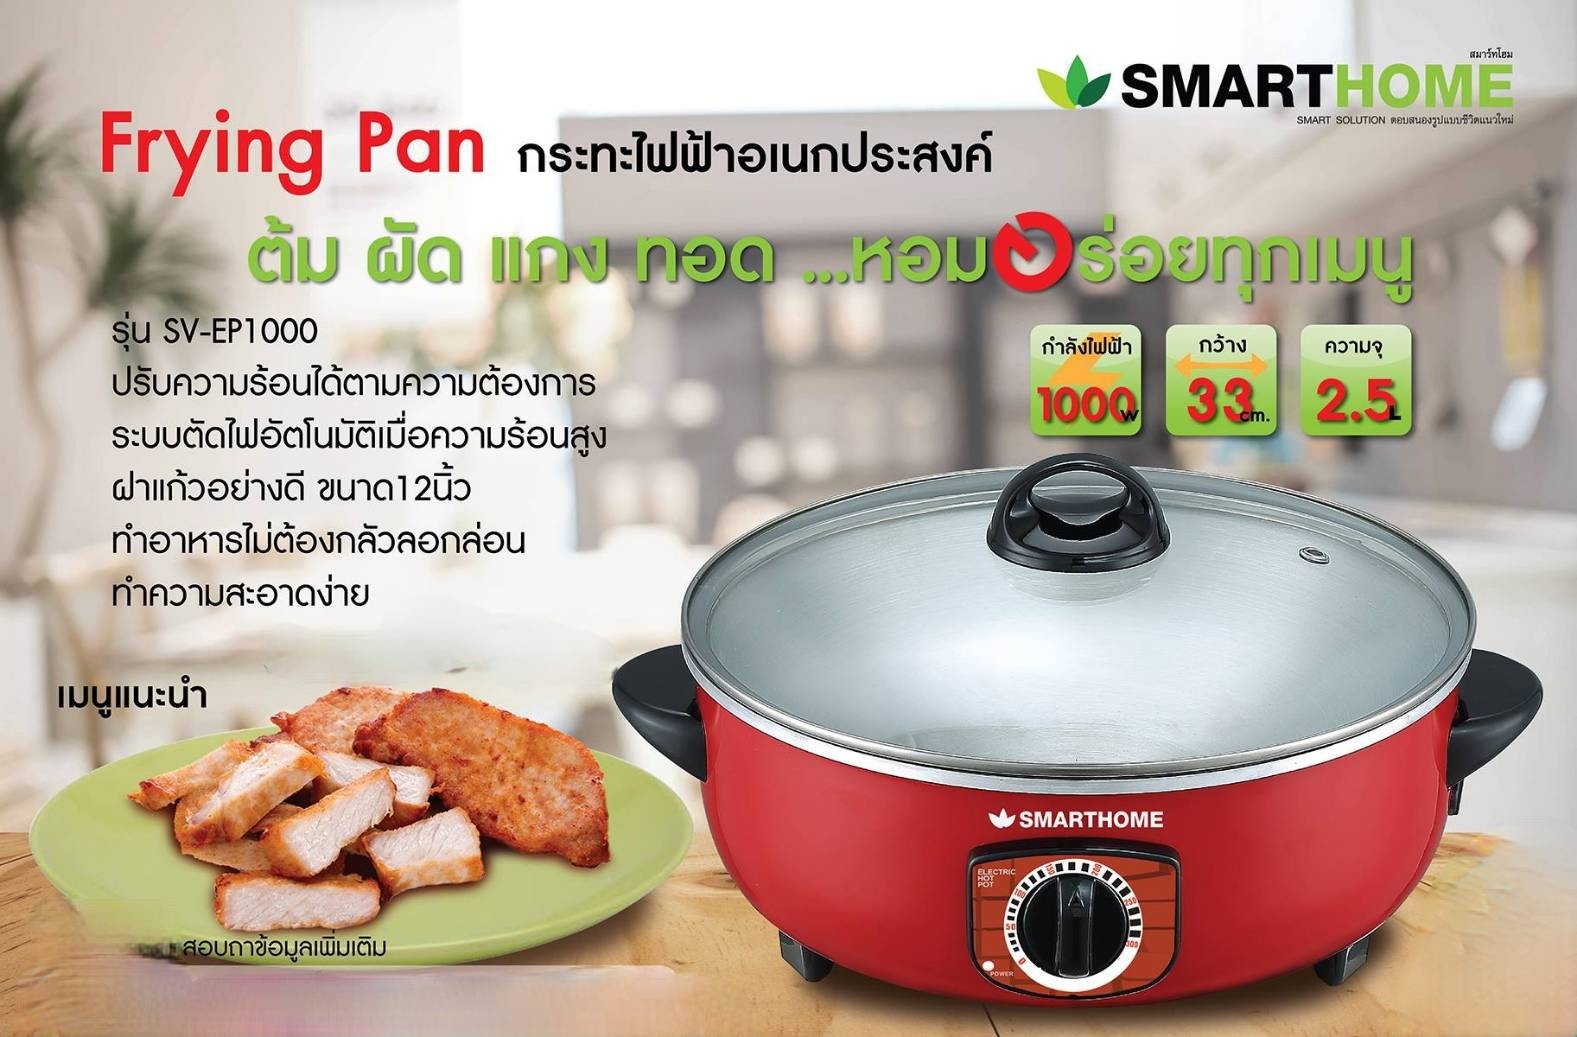 SMARTHOME กระทะไฟฟ้าอเนกประสงค์ 15 นิ้ว 2.5 ลิตร รุ่น SV-EP1000 ประกัน 3 ปี Electric Frying pan